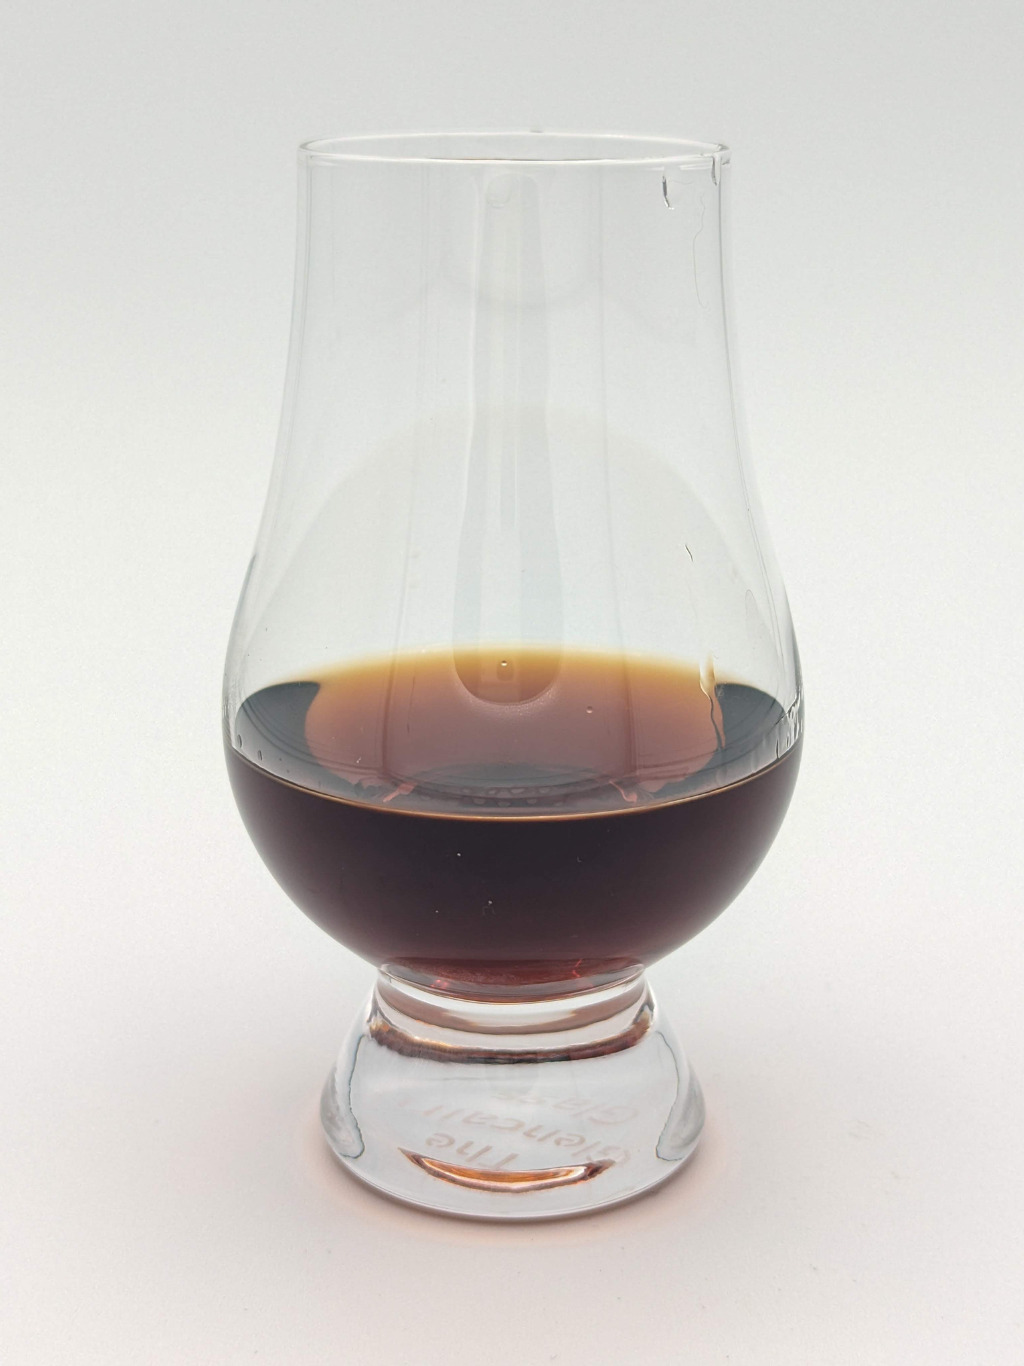 Dark brown liquid in a glencairn glass